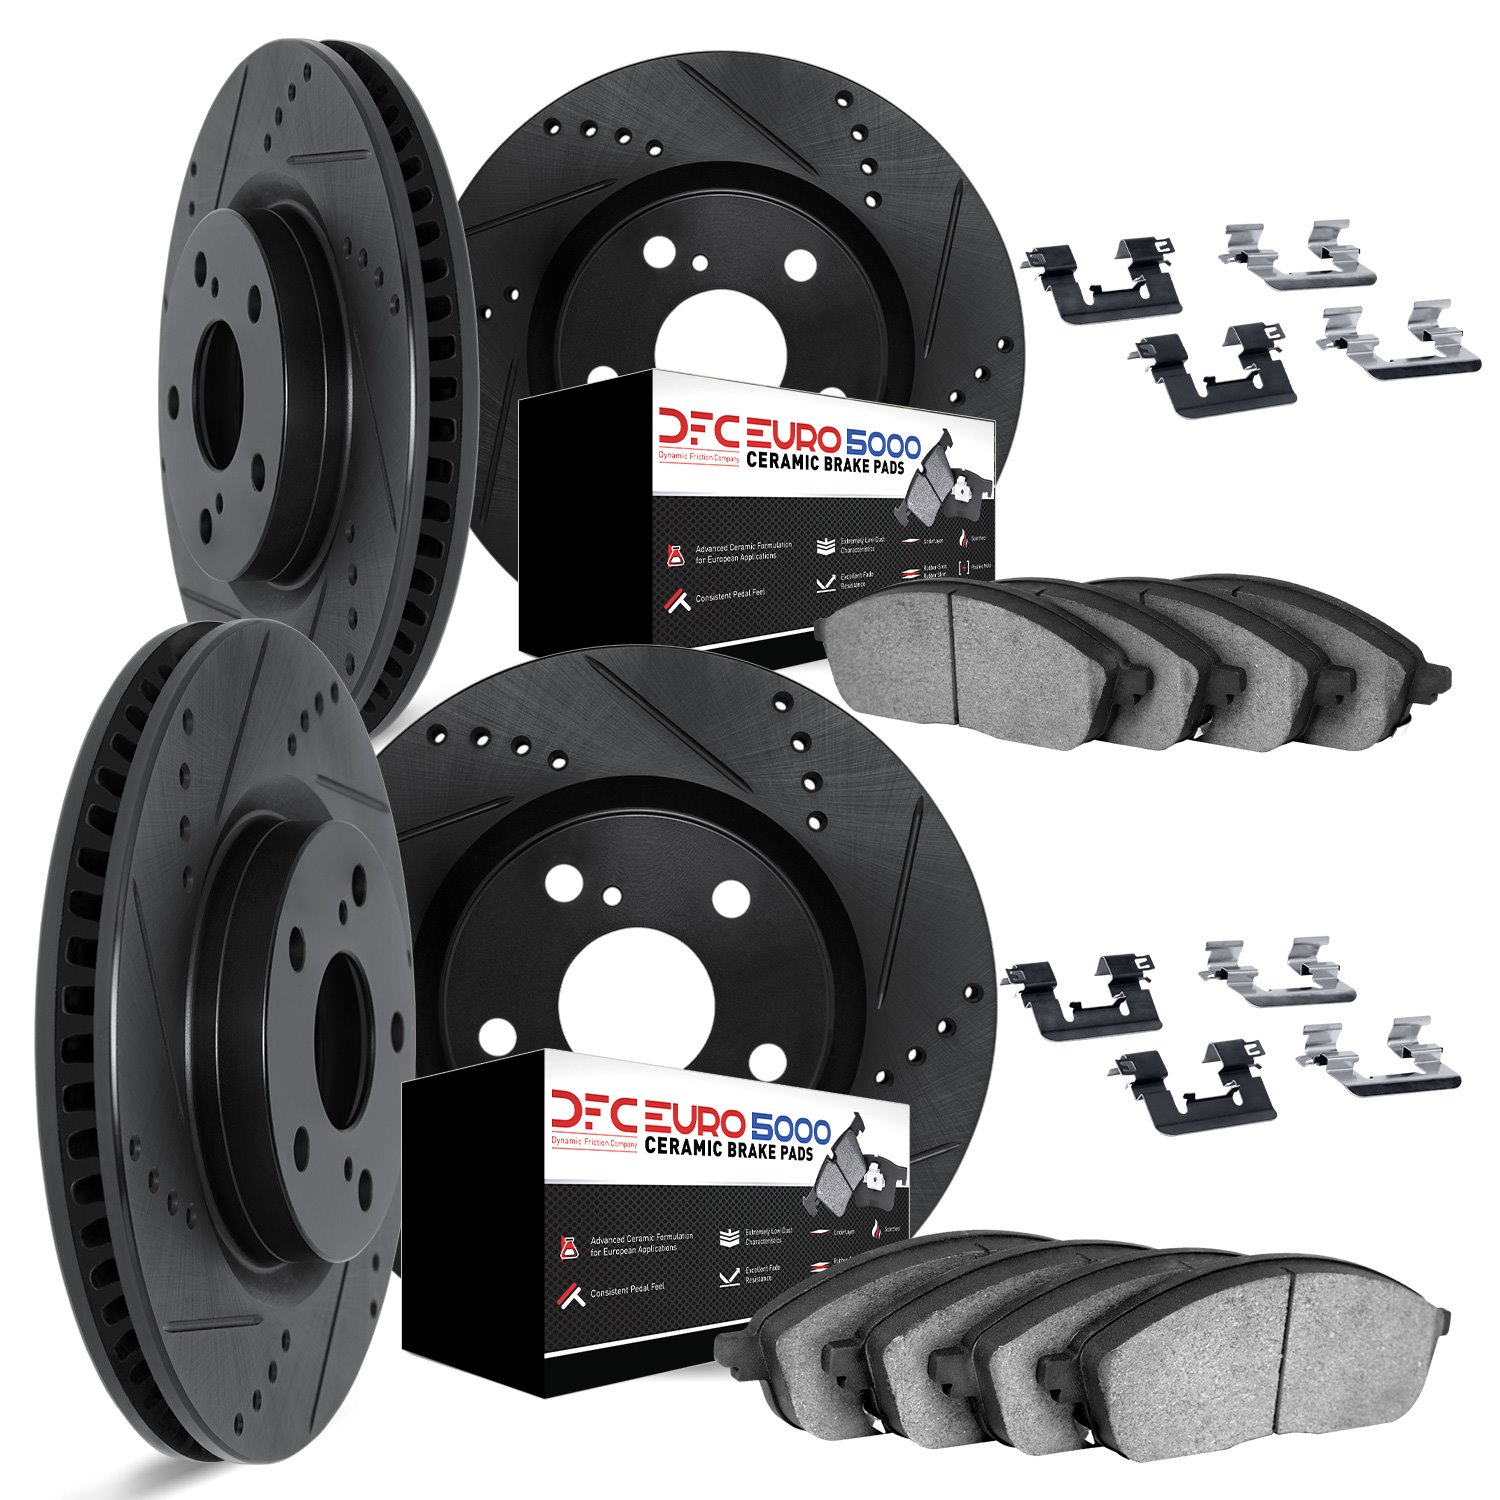 8614-54000 Drilled/Slotted Brake Rotors w/5000 Euro Ceramic Brake Pads Kit & Hardware [Black], 2000-2006 Multiple Makes/Models,